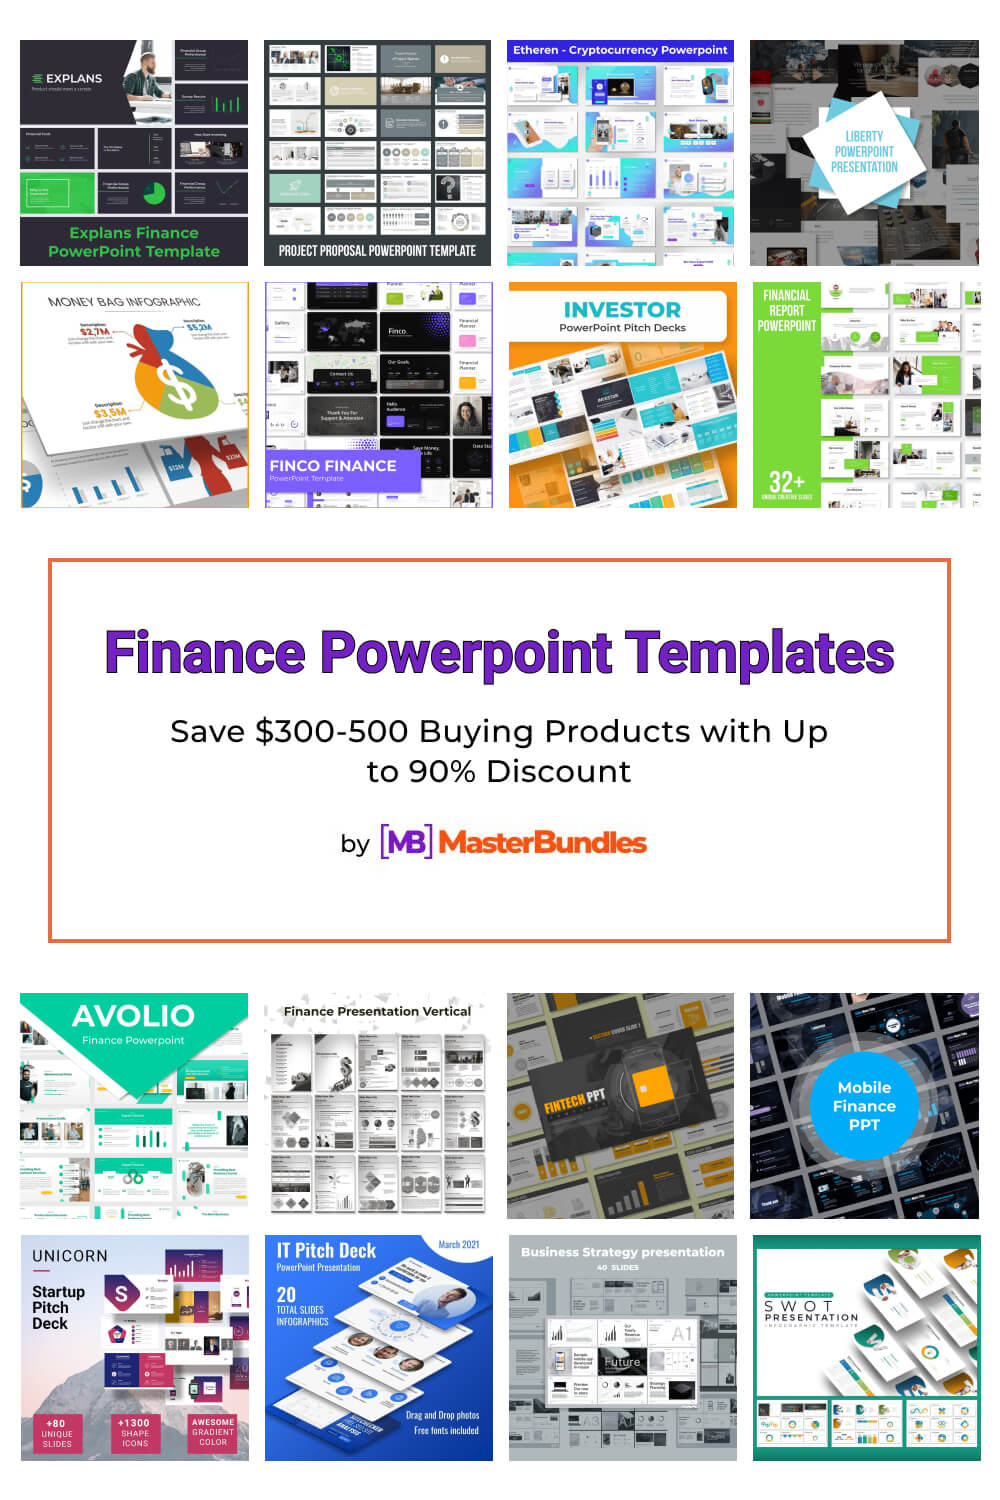 finance powerpoint templates pinterest image.